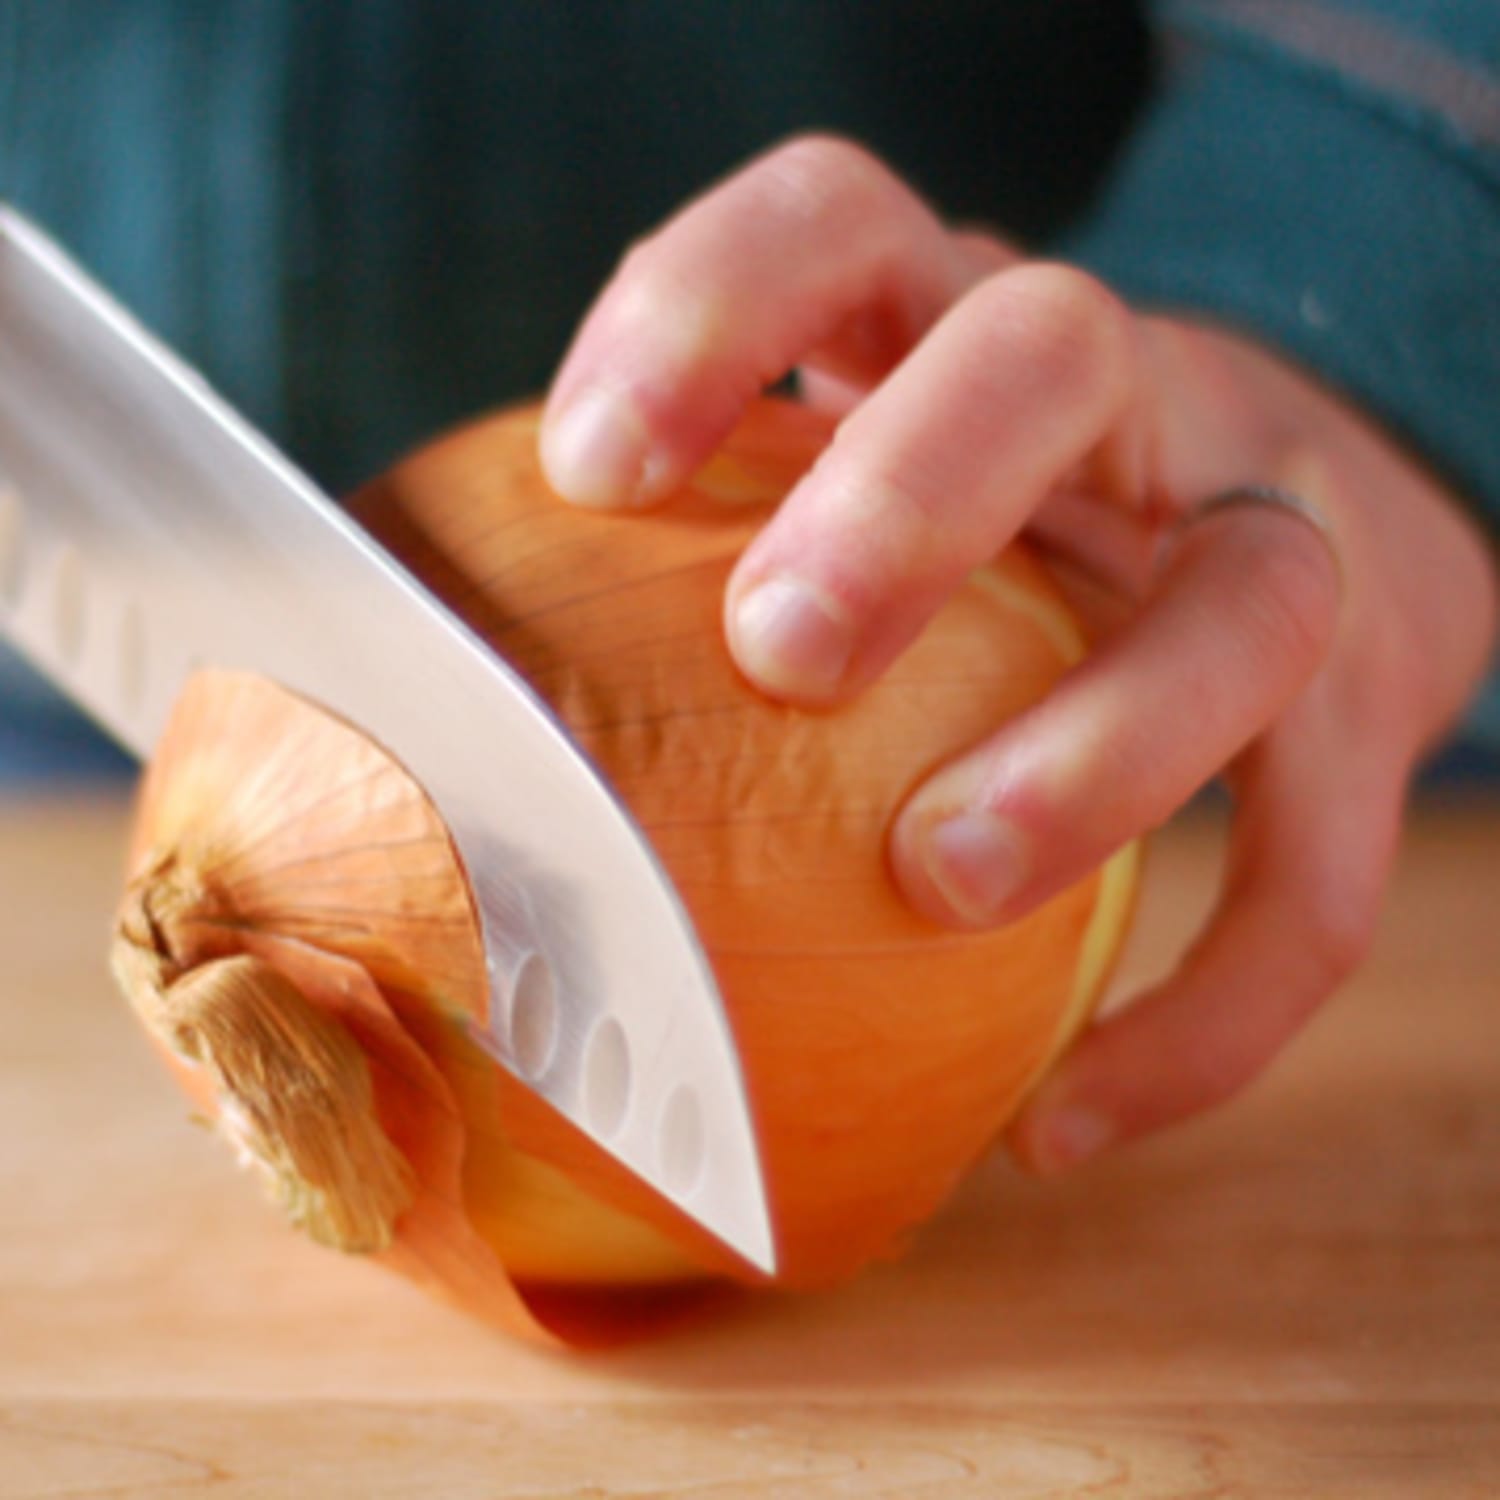 What makes a sharp knife cut